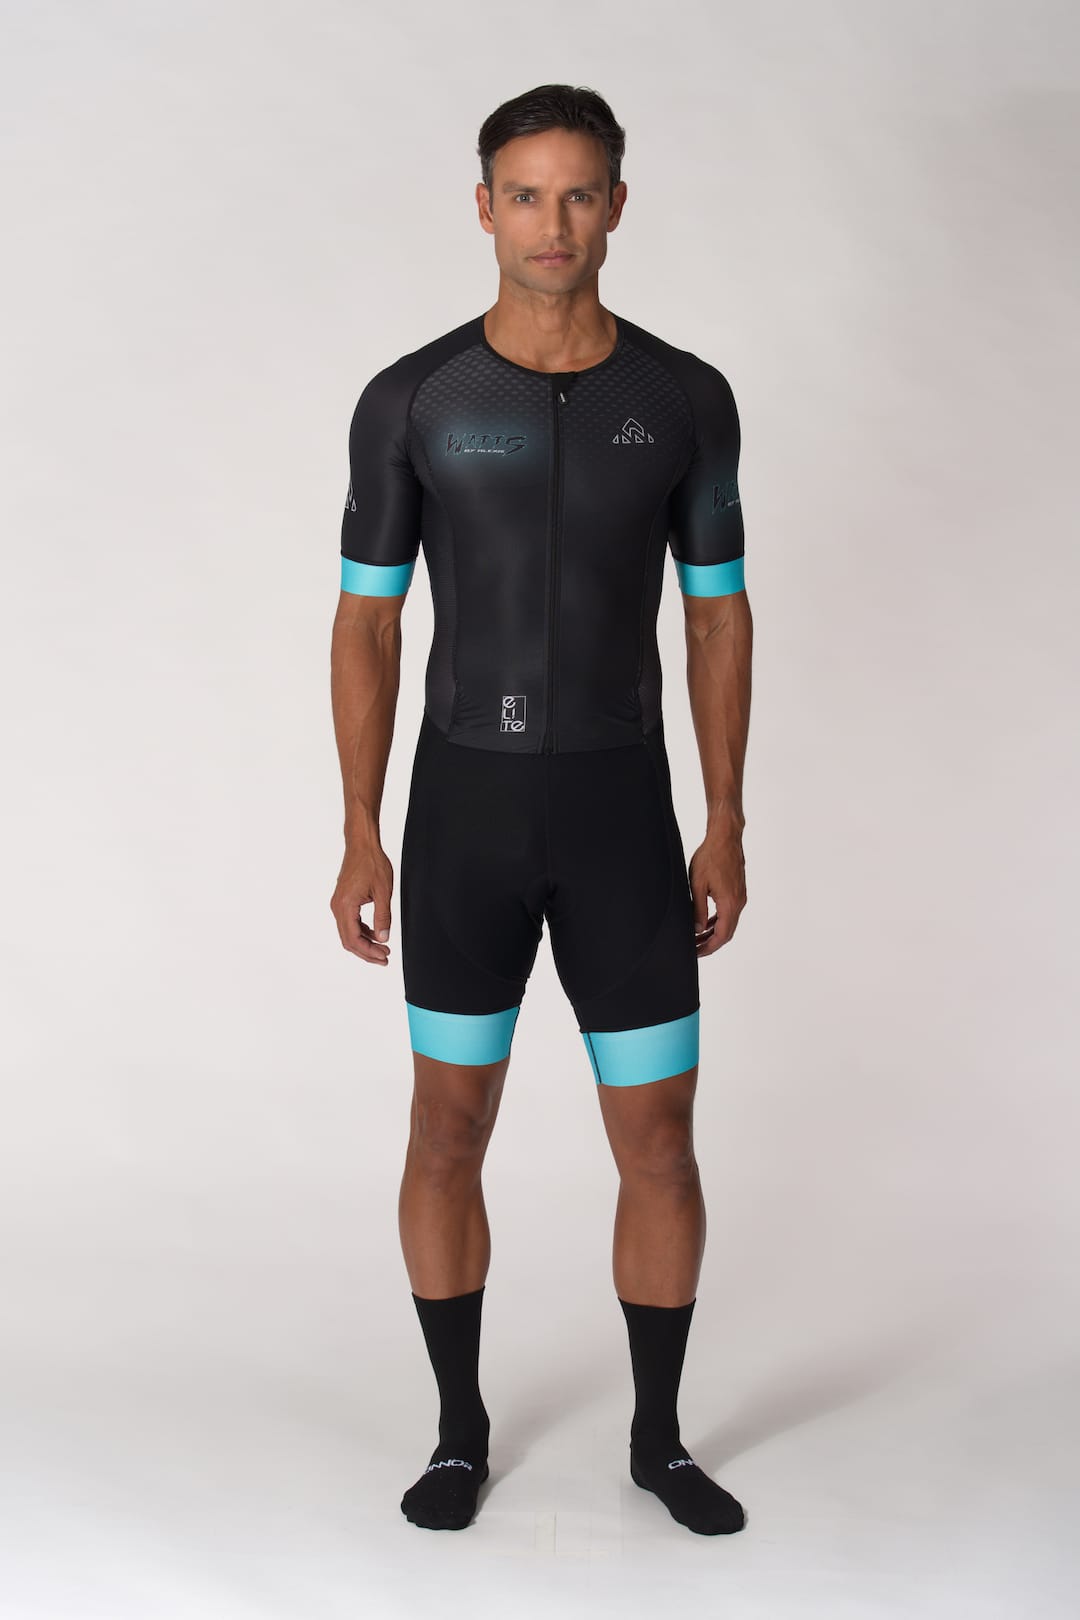 buy custom trisuit , customized triathlon clothing miami, custom cycling jersey made in usa